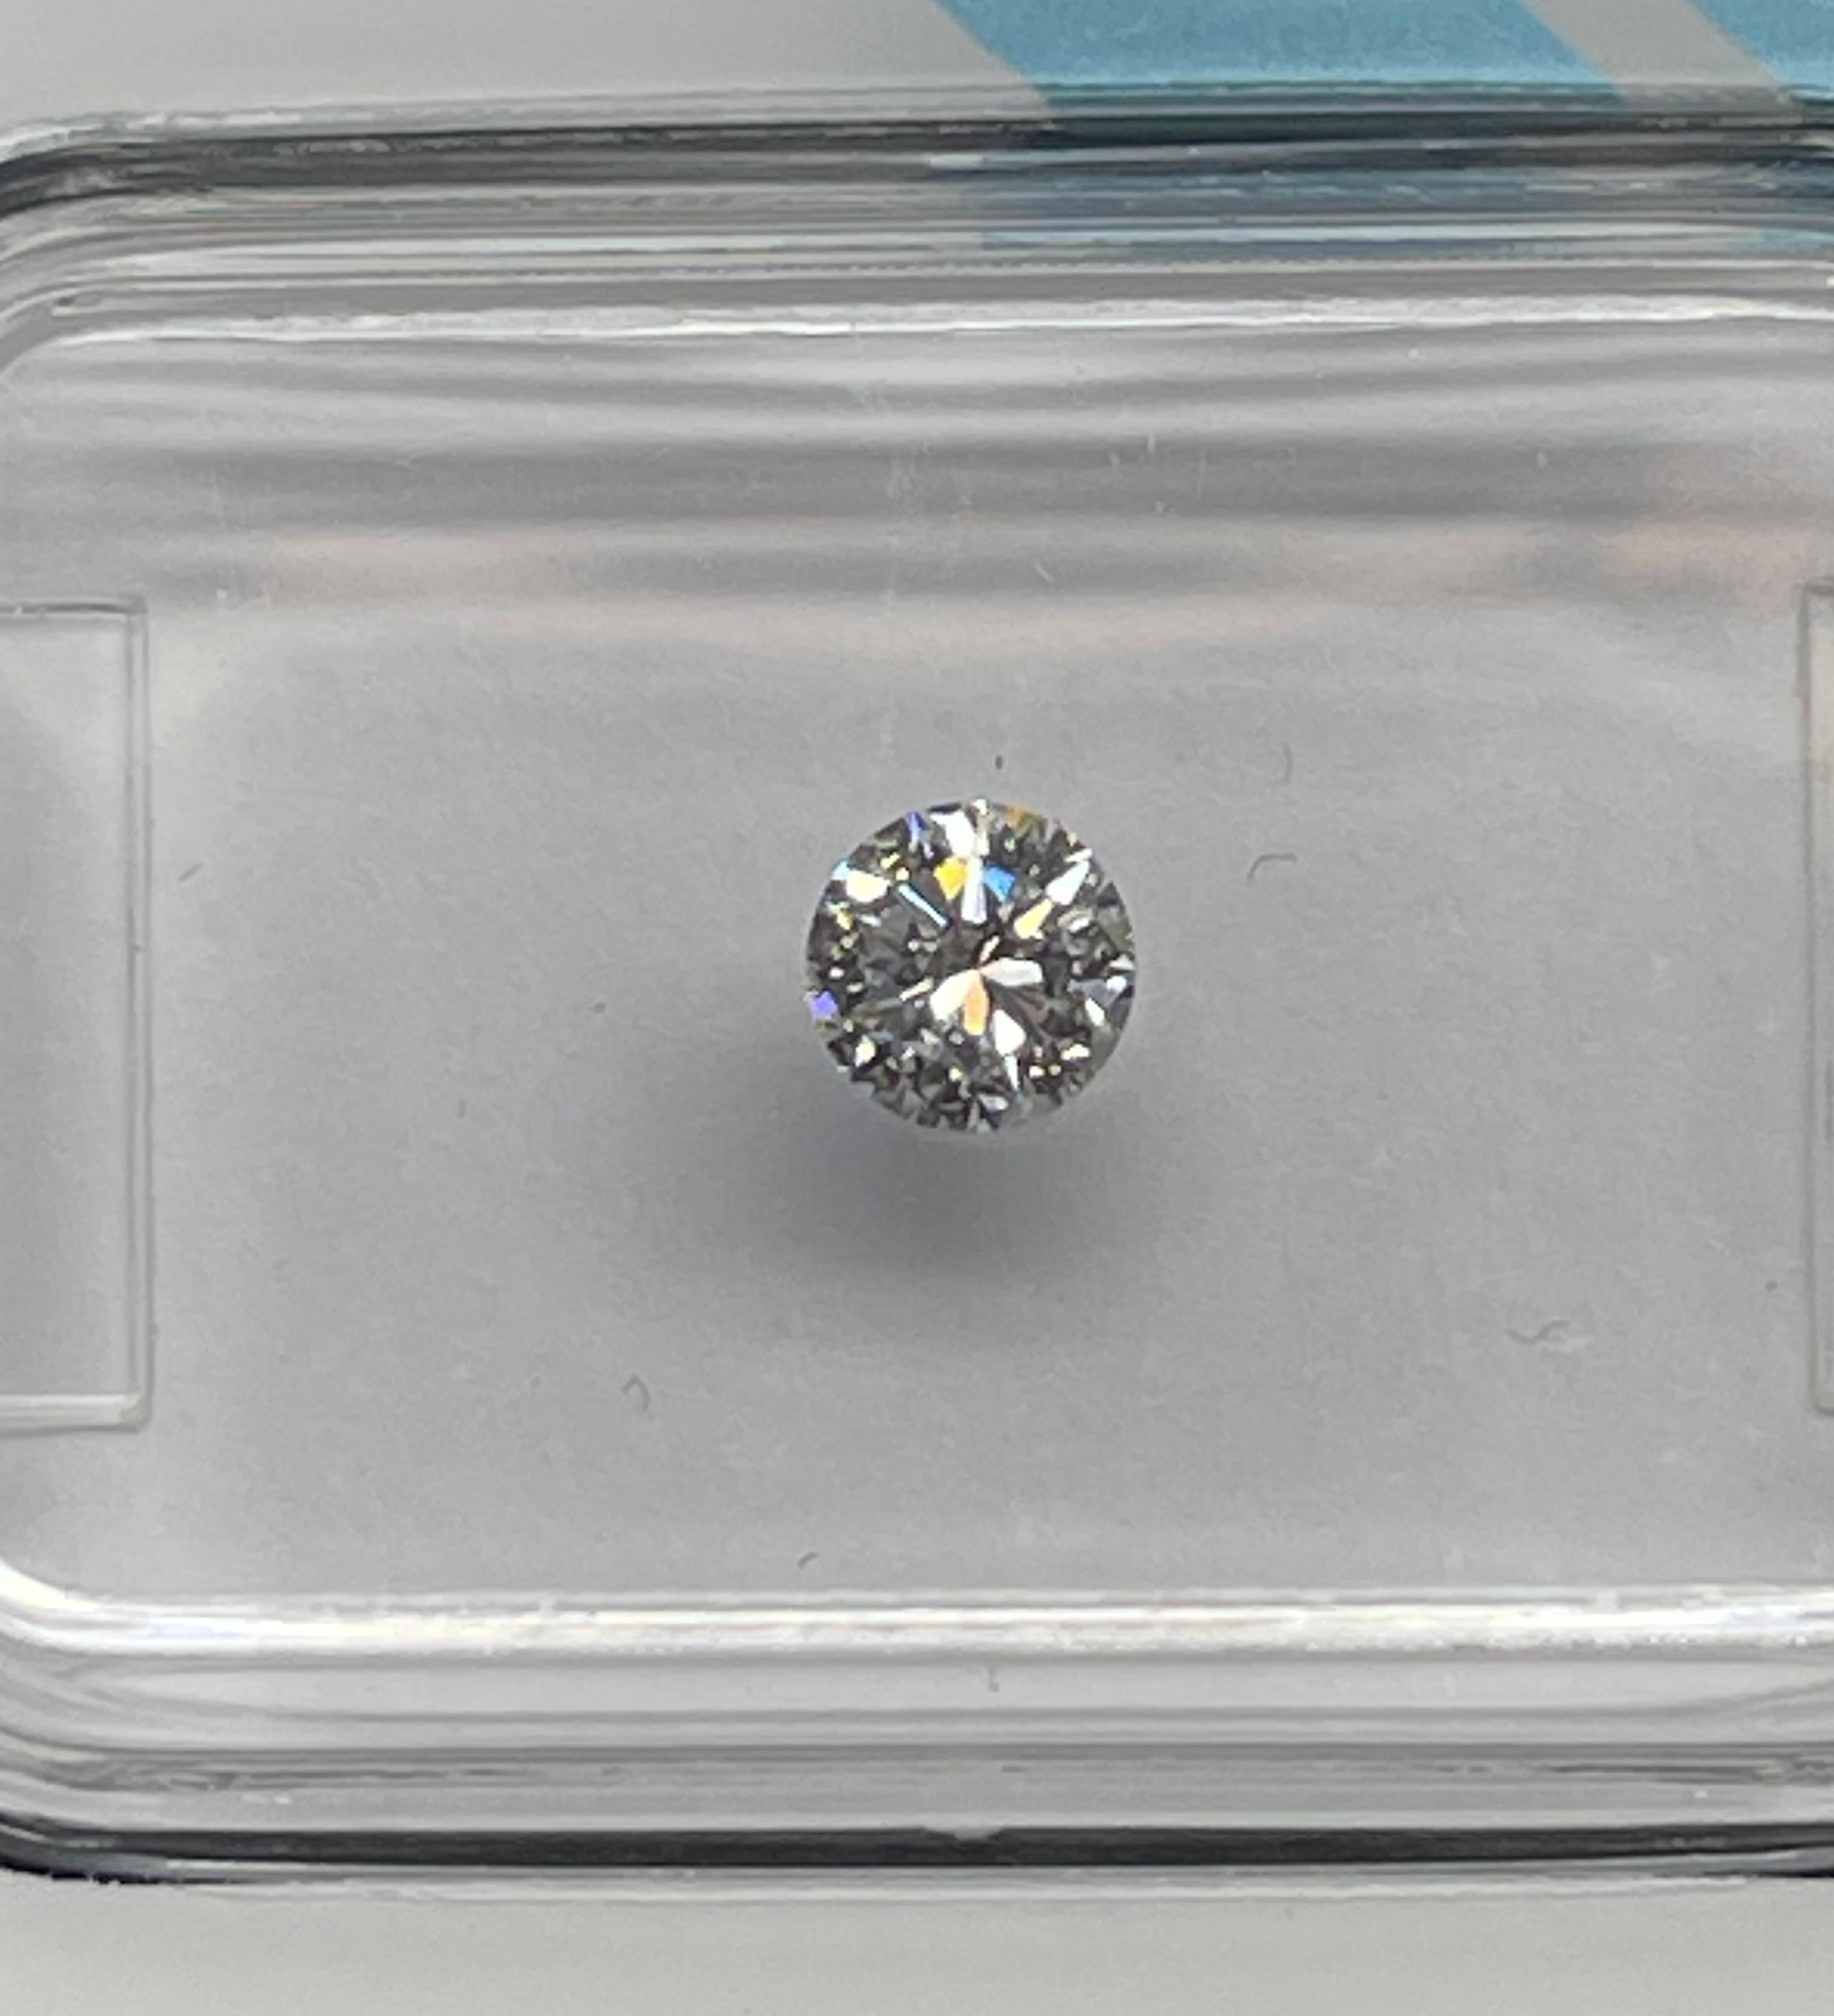 Natural Diamond graded by IGI.

Shape: Round Brilliant
Weight: 0.23CT
Color: D
Clarity: VS1
Cut: Very Good
Polish: Excellent
Symmetry: Excellent
Fluorescence: None
Inscription : IGI 630434192